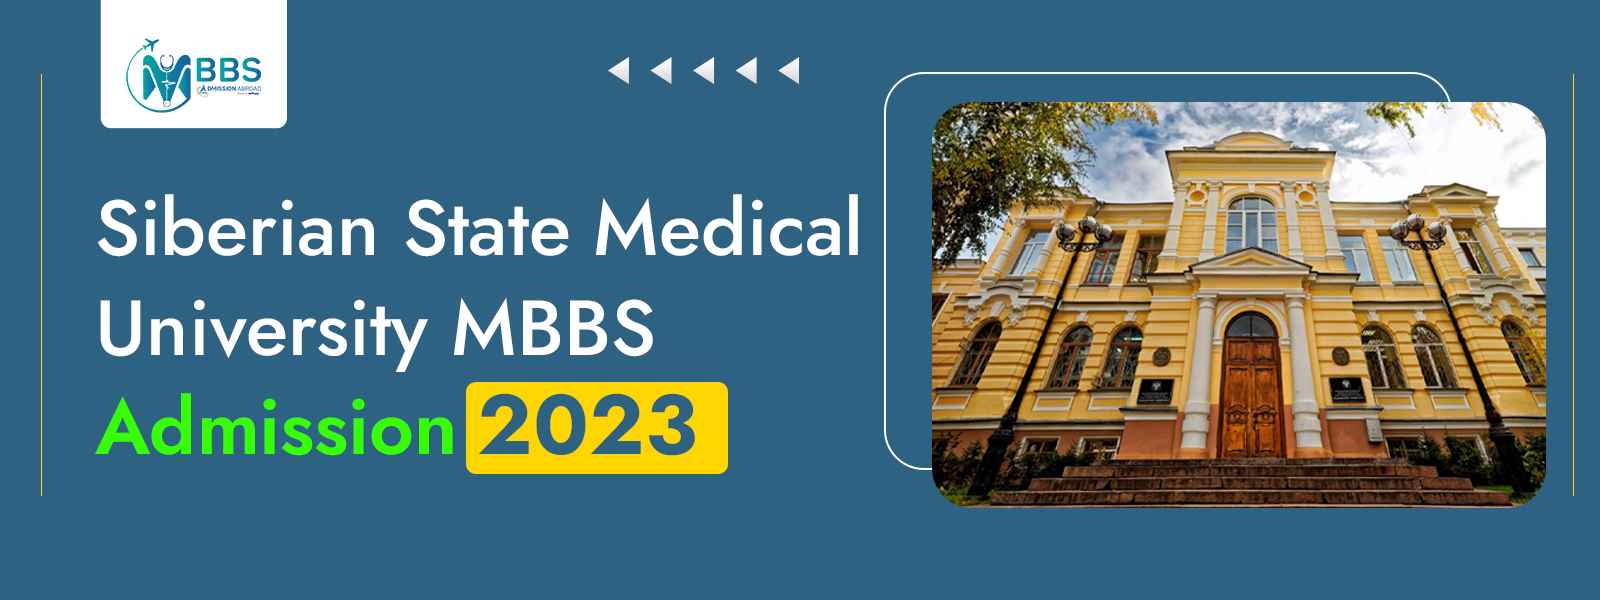 Siberian State Medical University MBBS Admission 2023